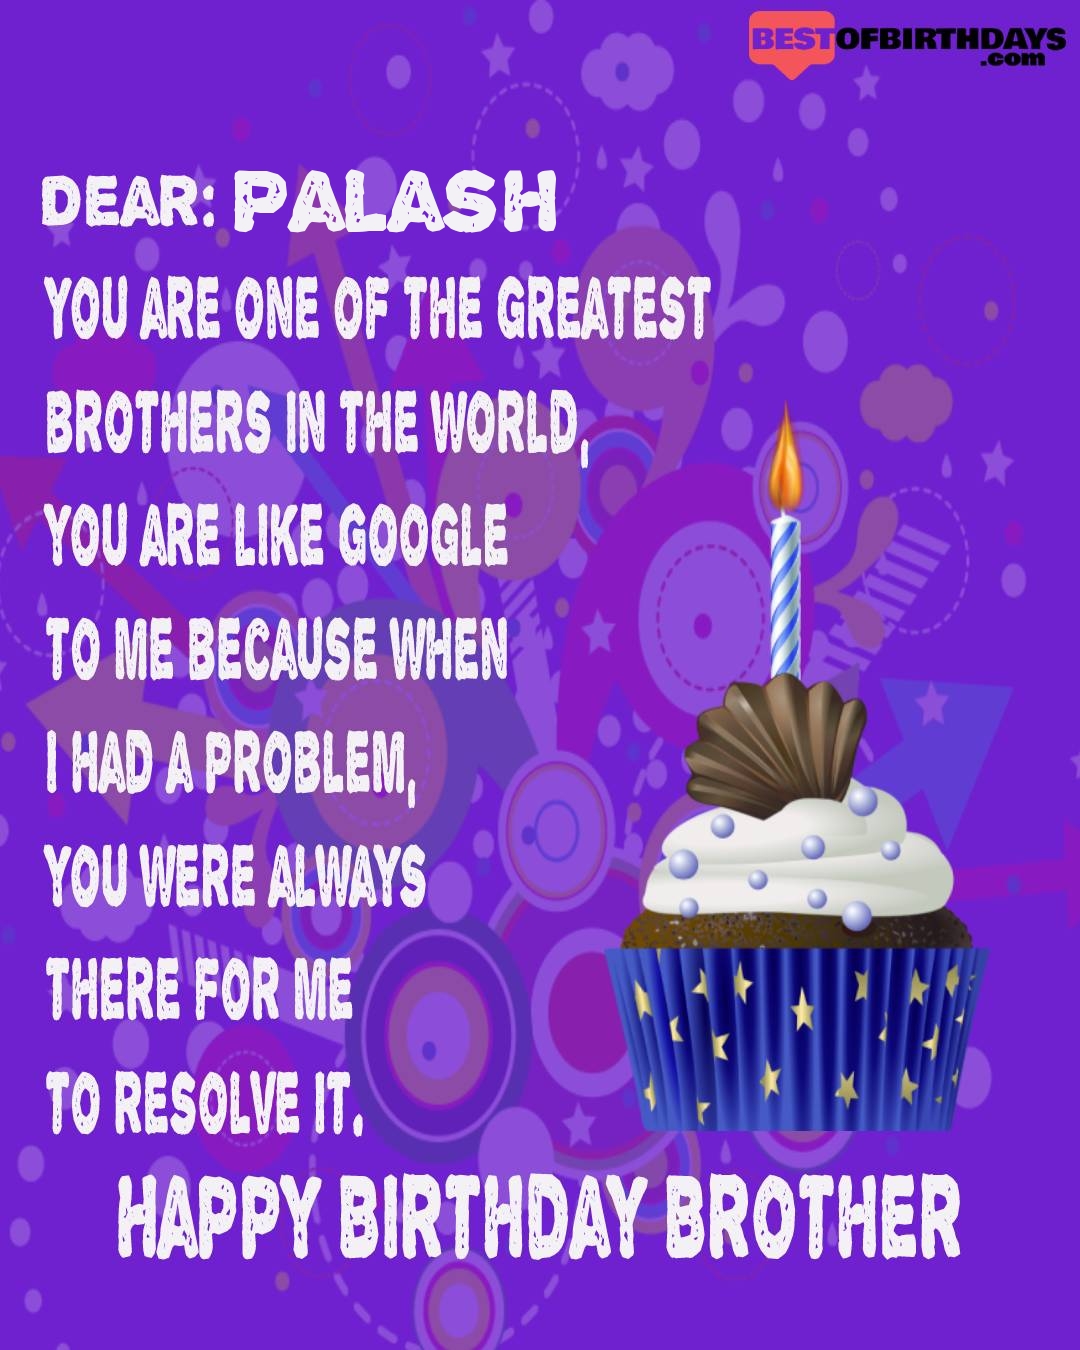 Happy birthday palash bhai brother bro